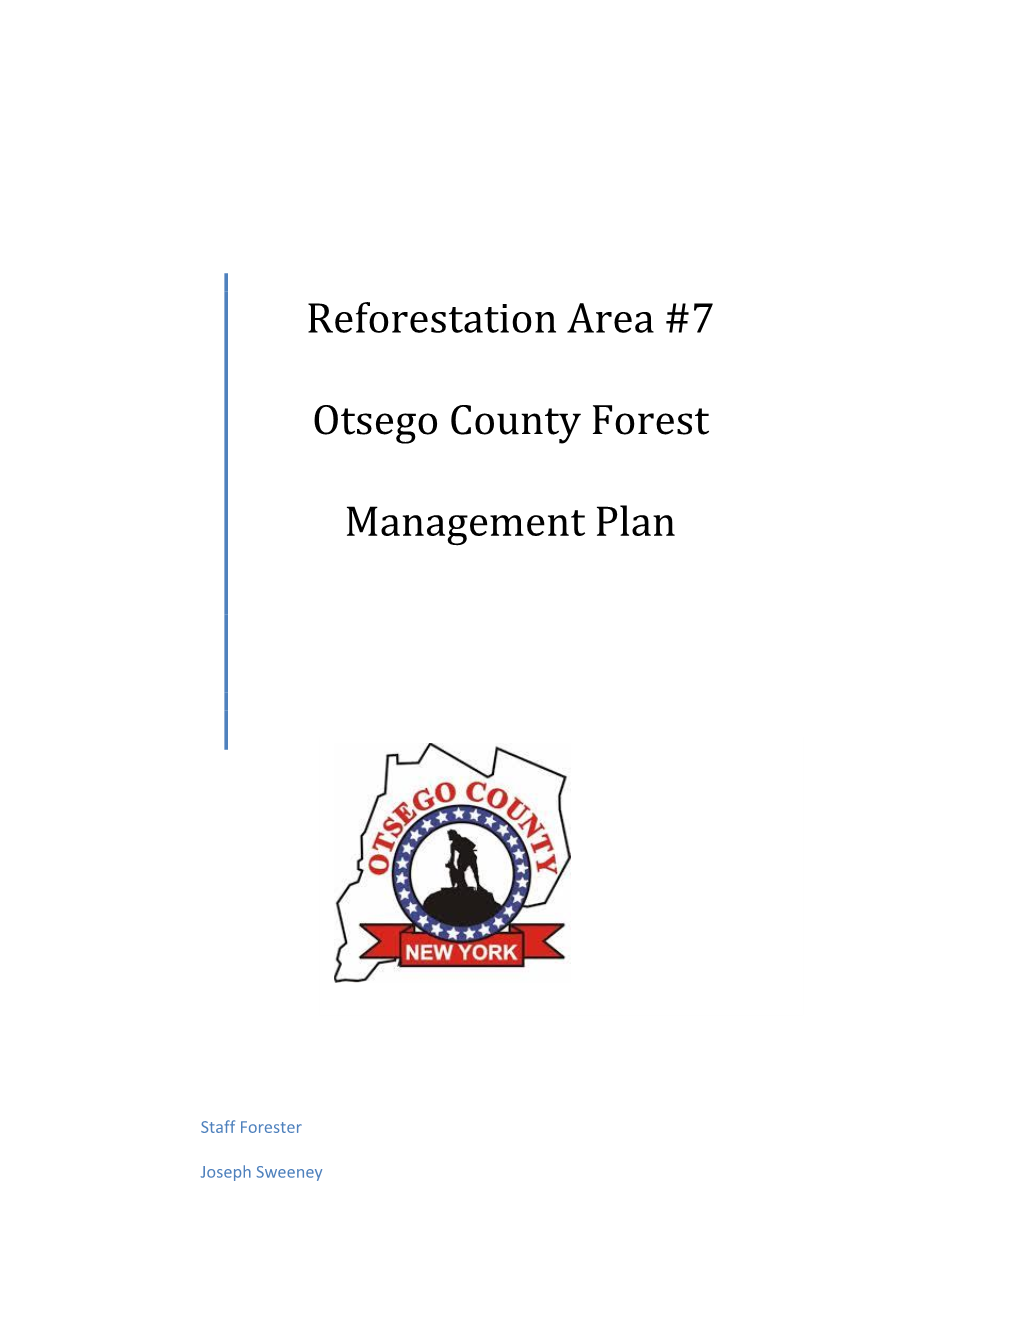 Re Forestation Area #7 Forest Management Plan